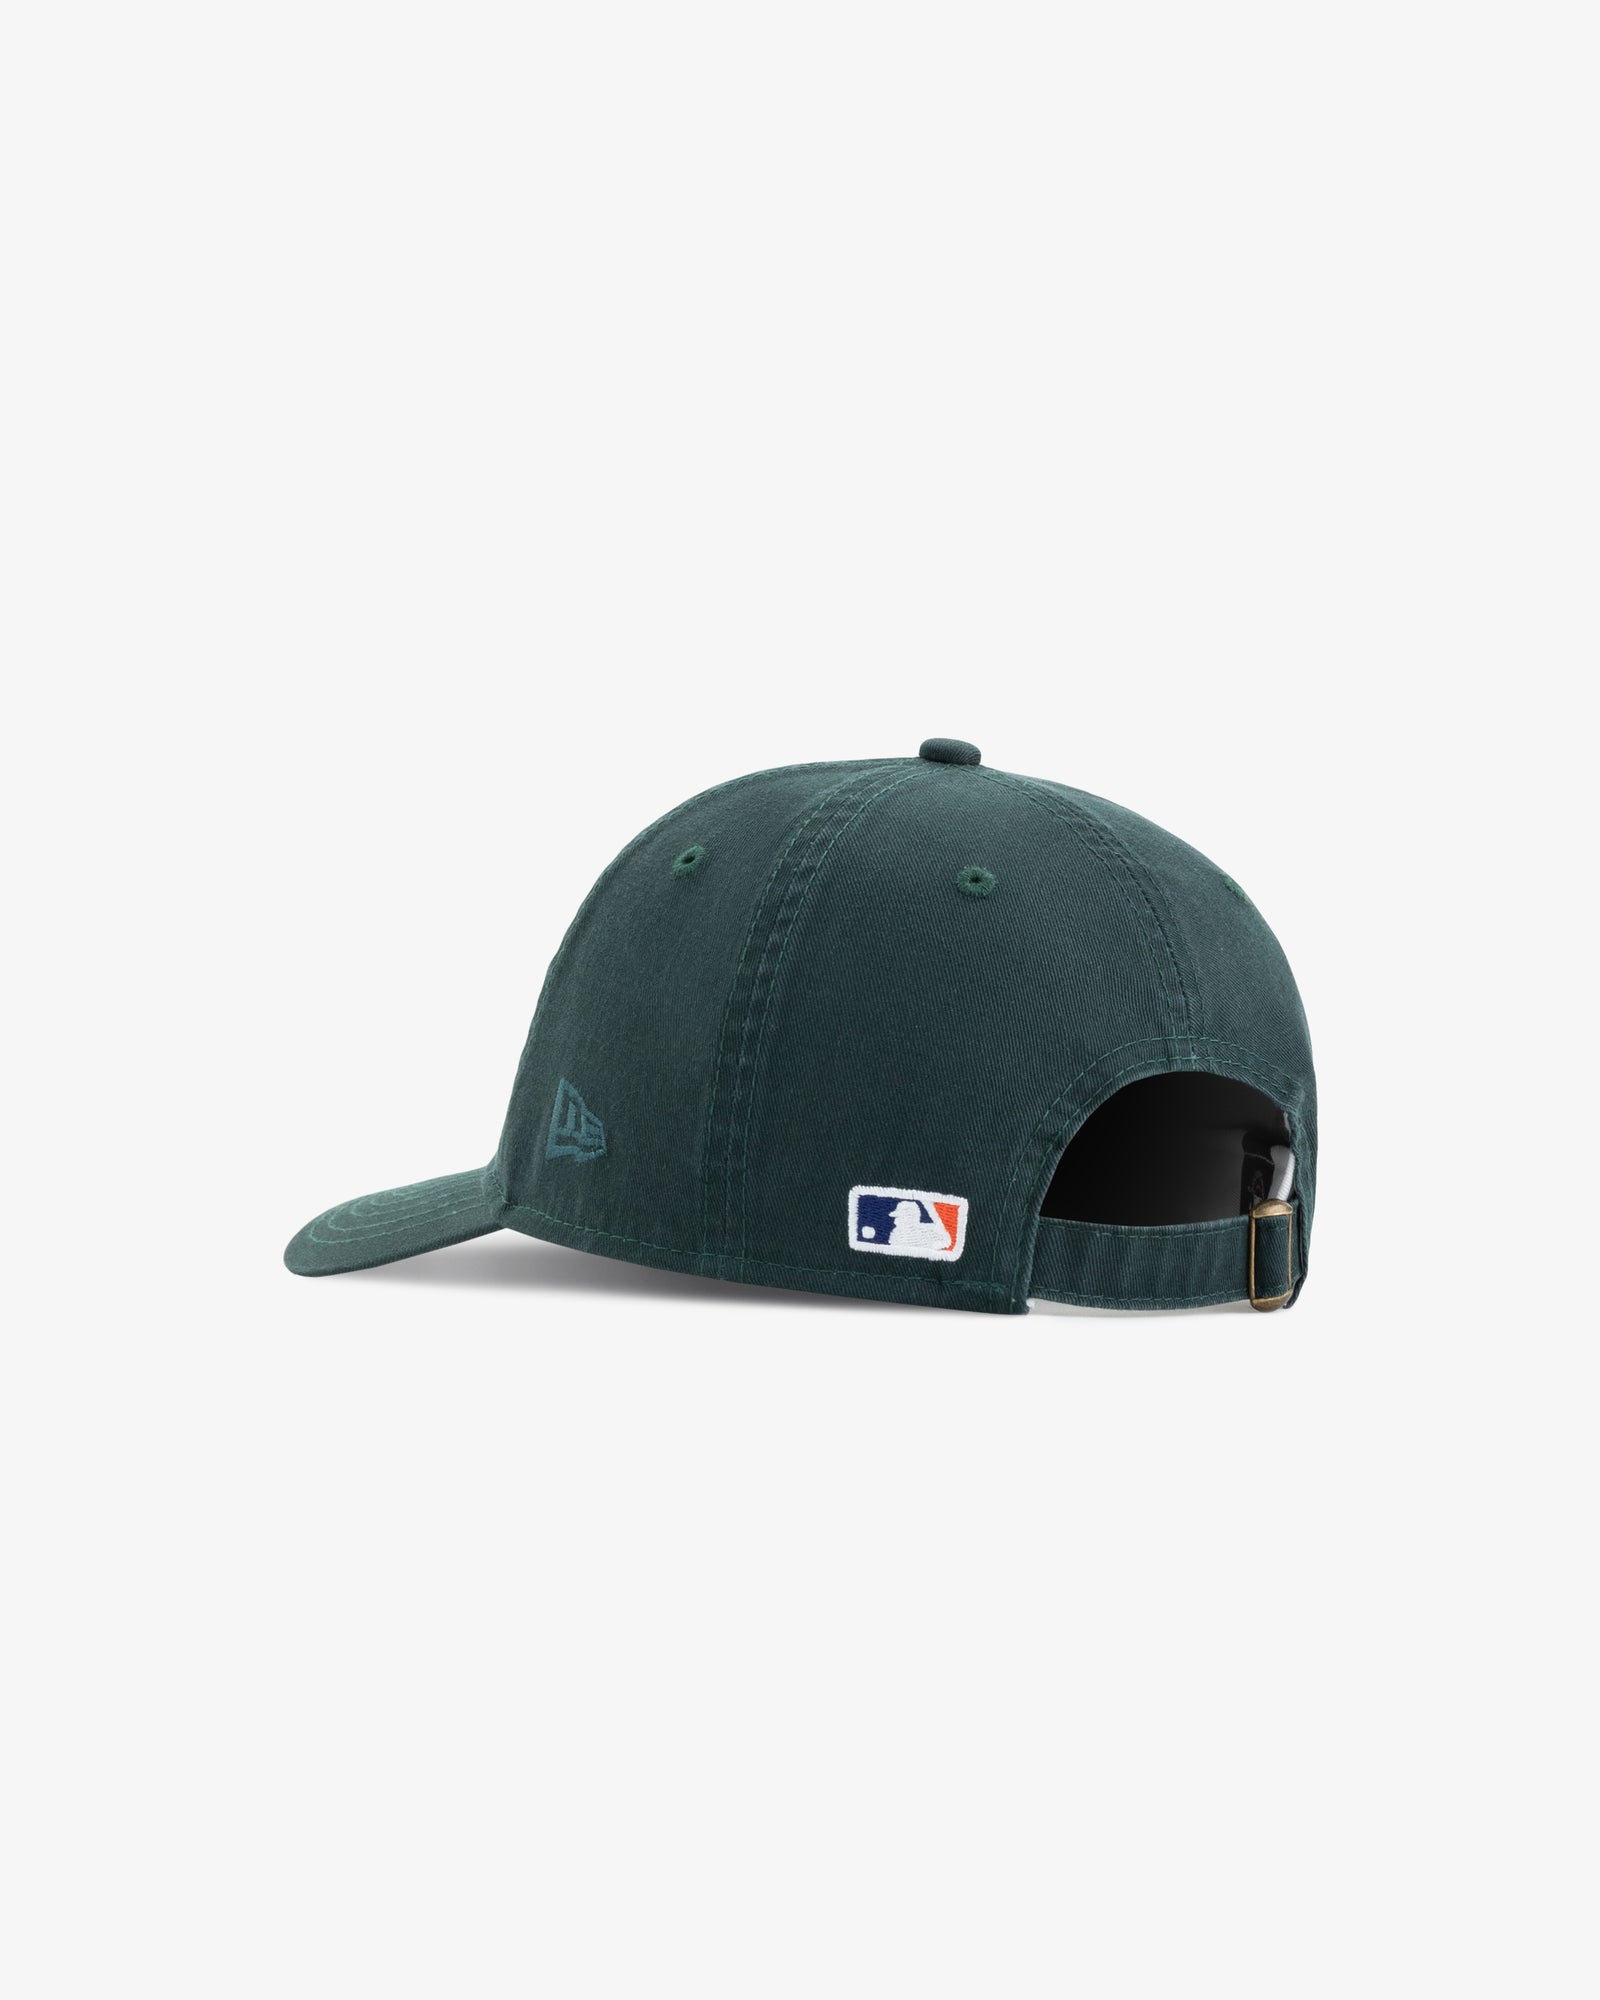 ALD / New Era  Mets Ballpark Hat